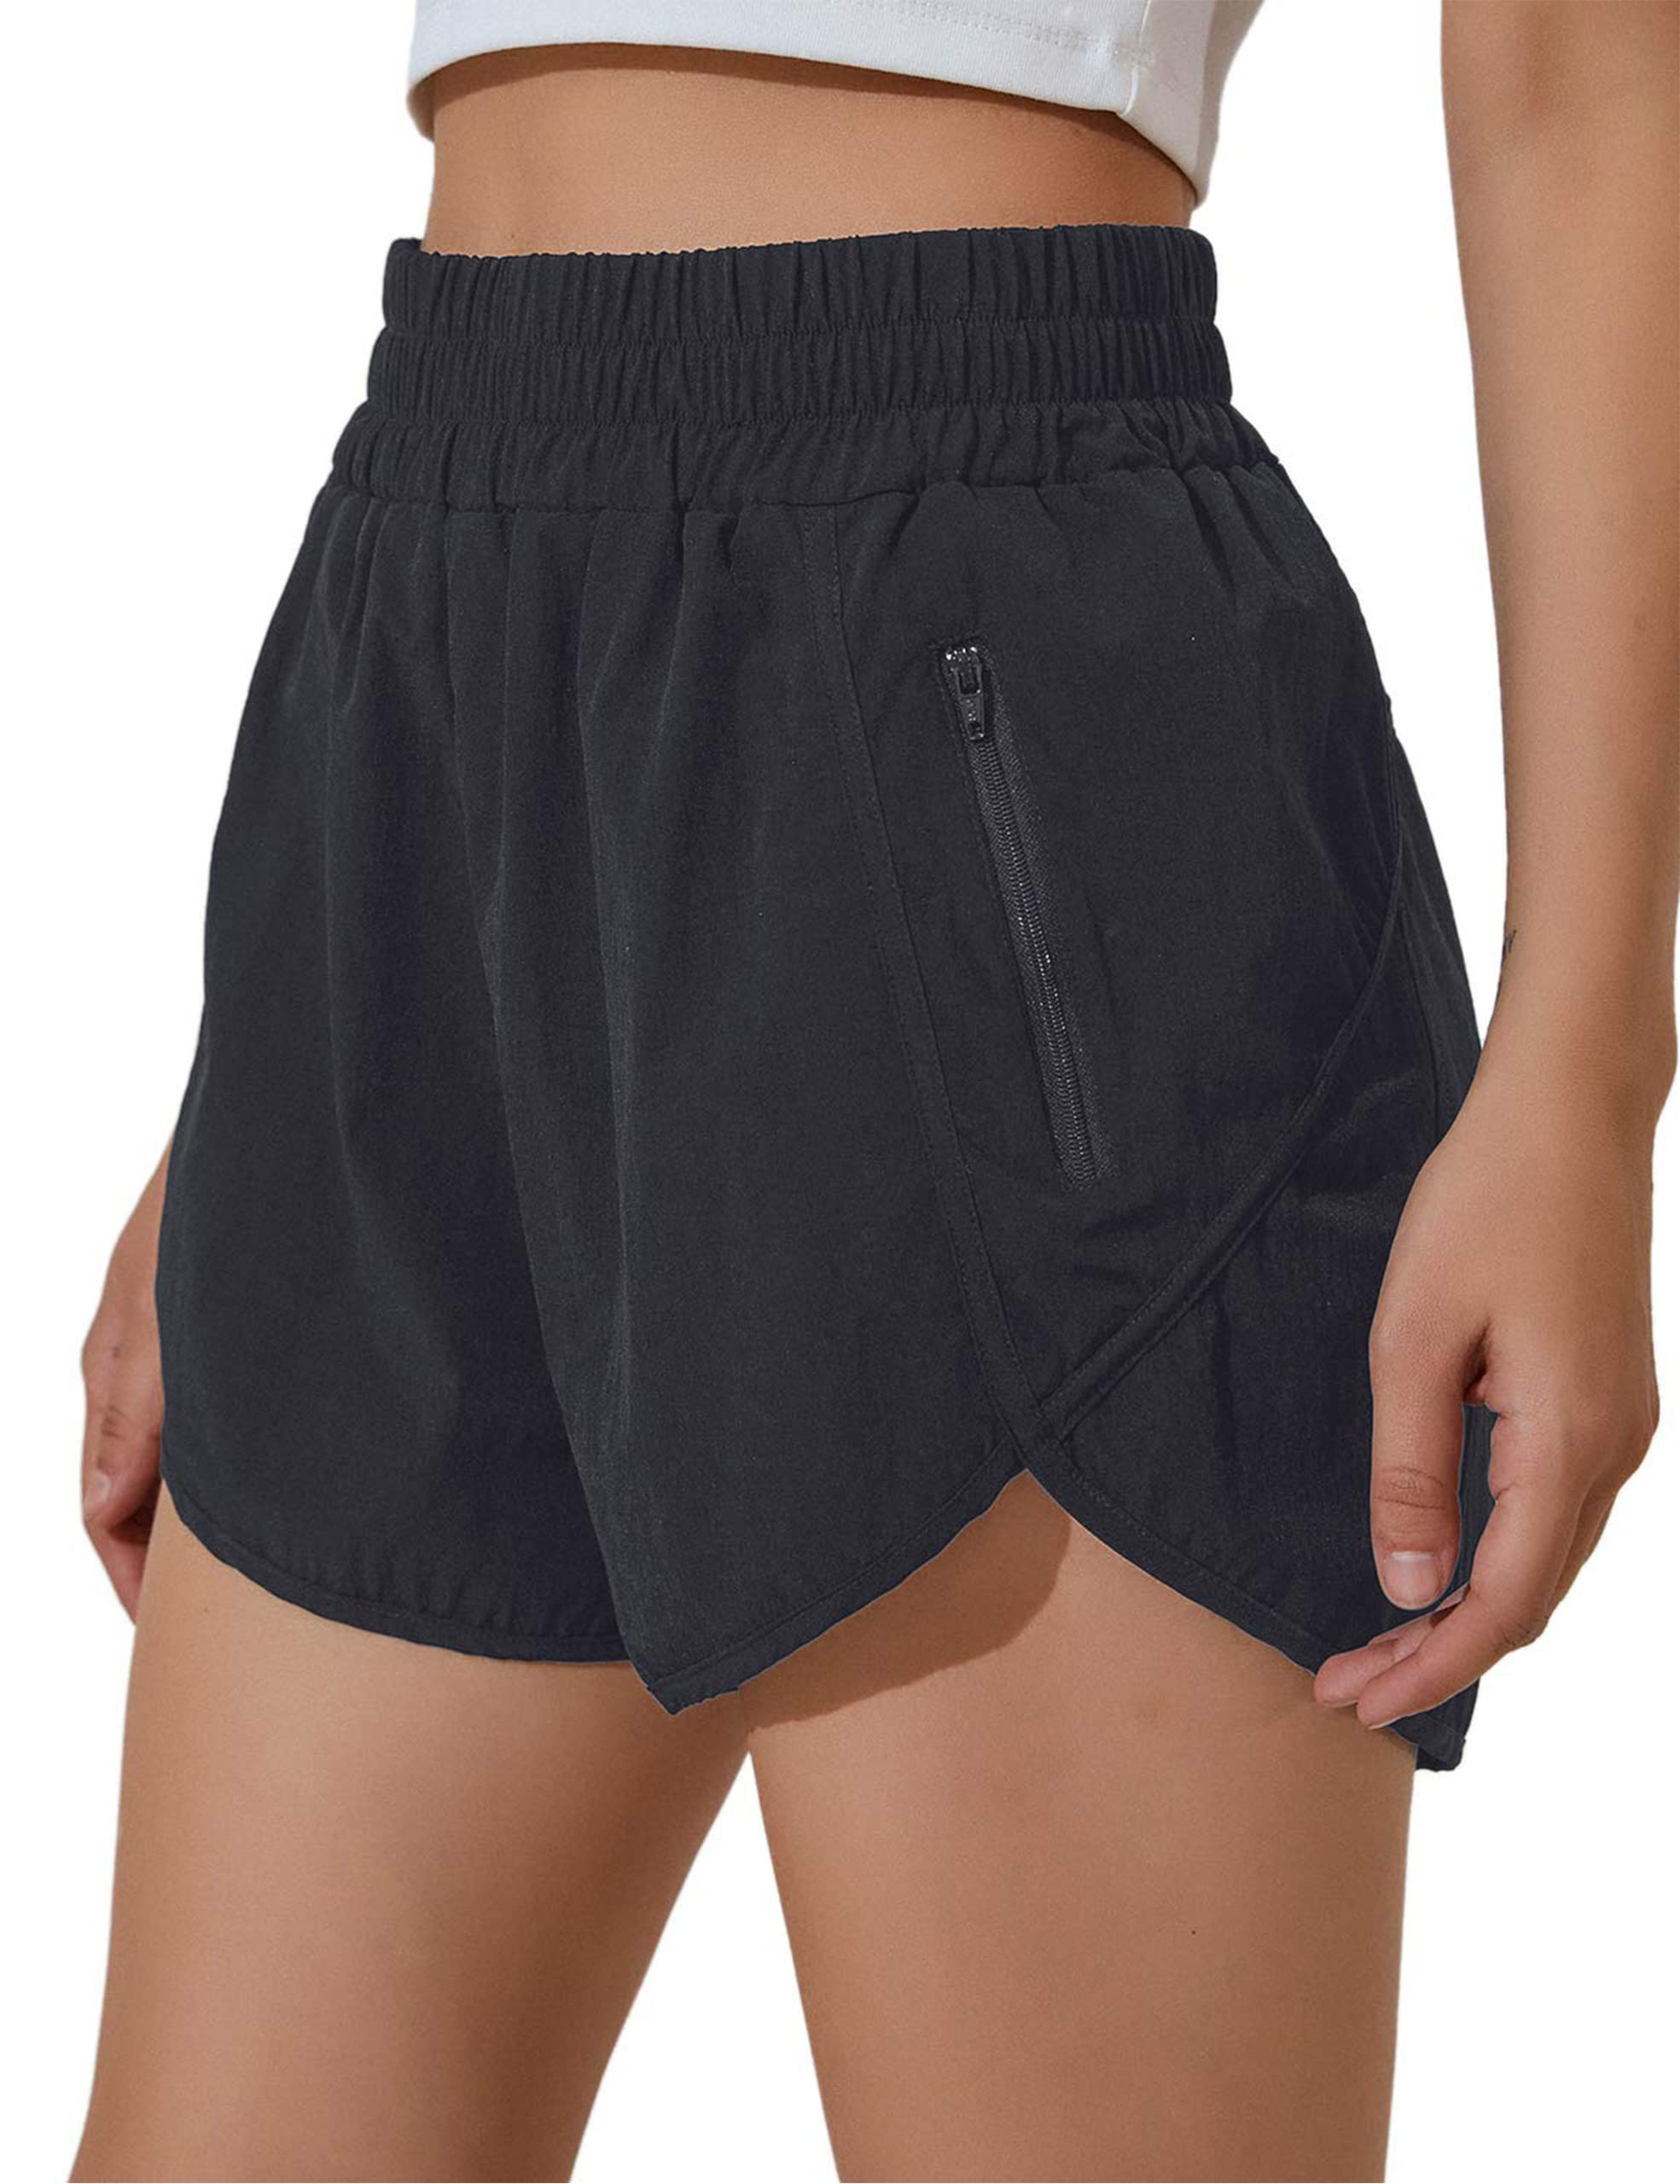 BMJL Women's Running Shorts Elastic High Waisted Shorts Pocket Sporty Workout Shorts Quick Dry Athletic Shorts Pants